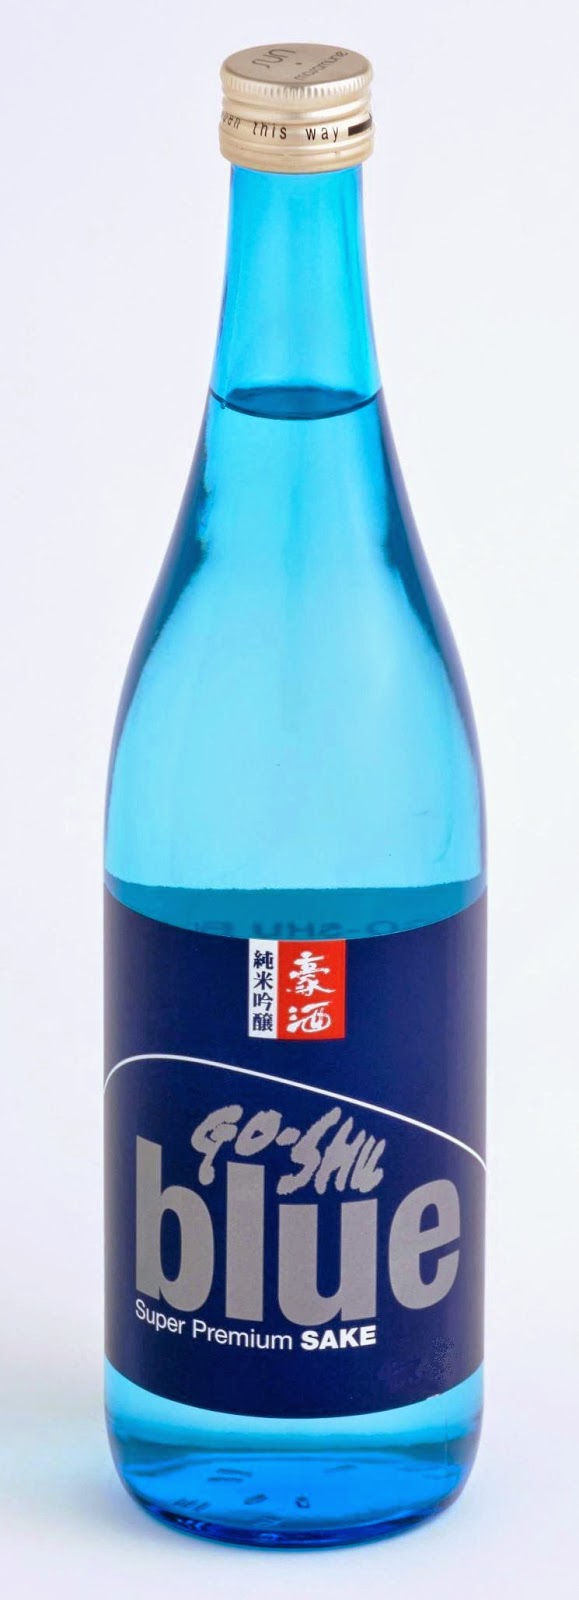 Go-Shu Australian Sake Brewery | store | 29 Cassola Pl, Penrith NSW 2750, Australia | 0247322833 OR +61 2 4732 2833